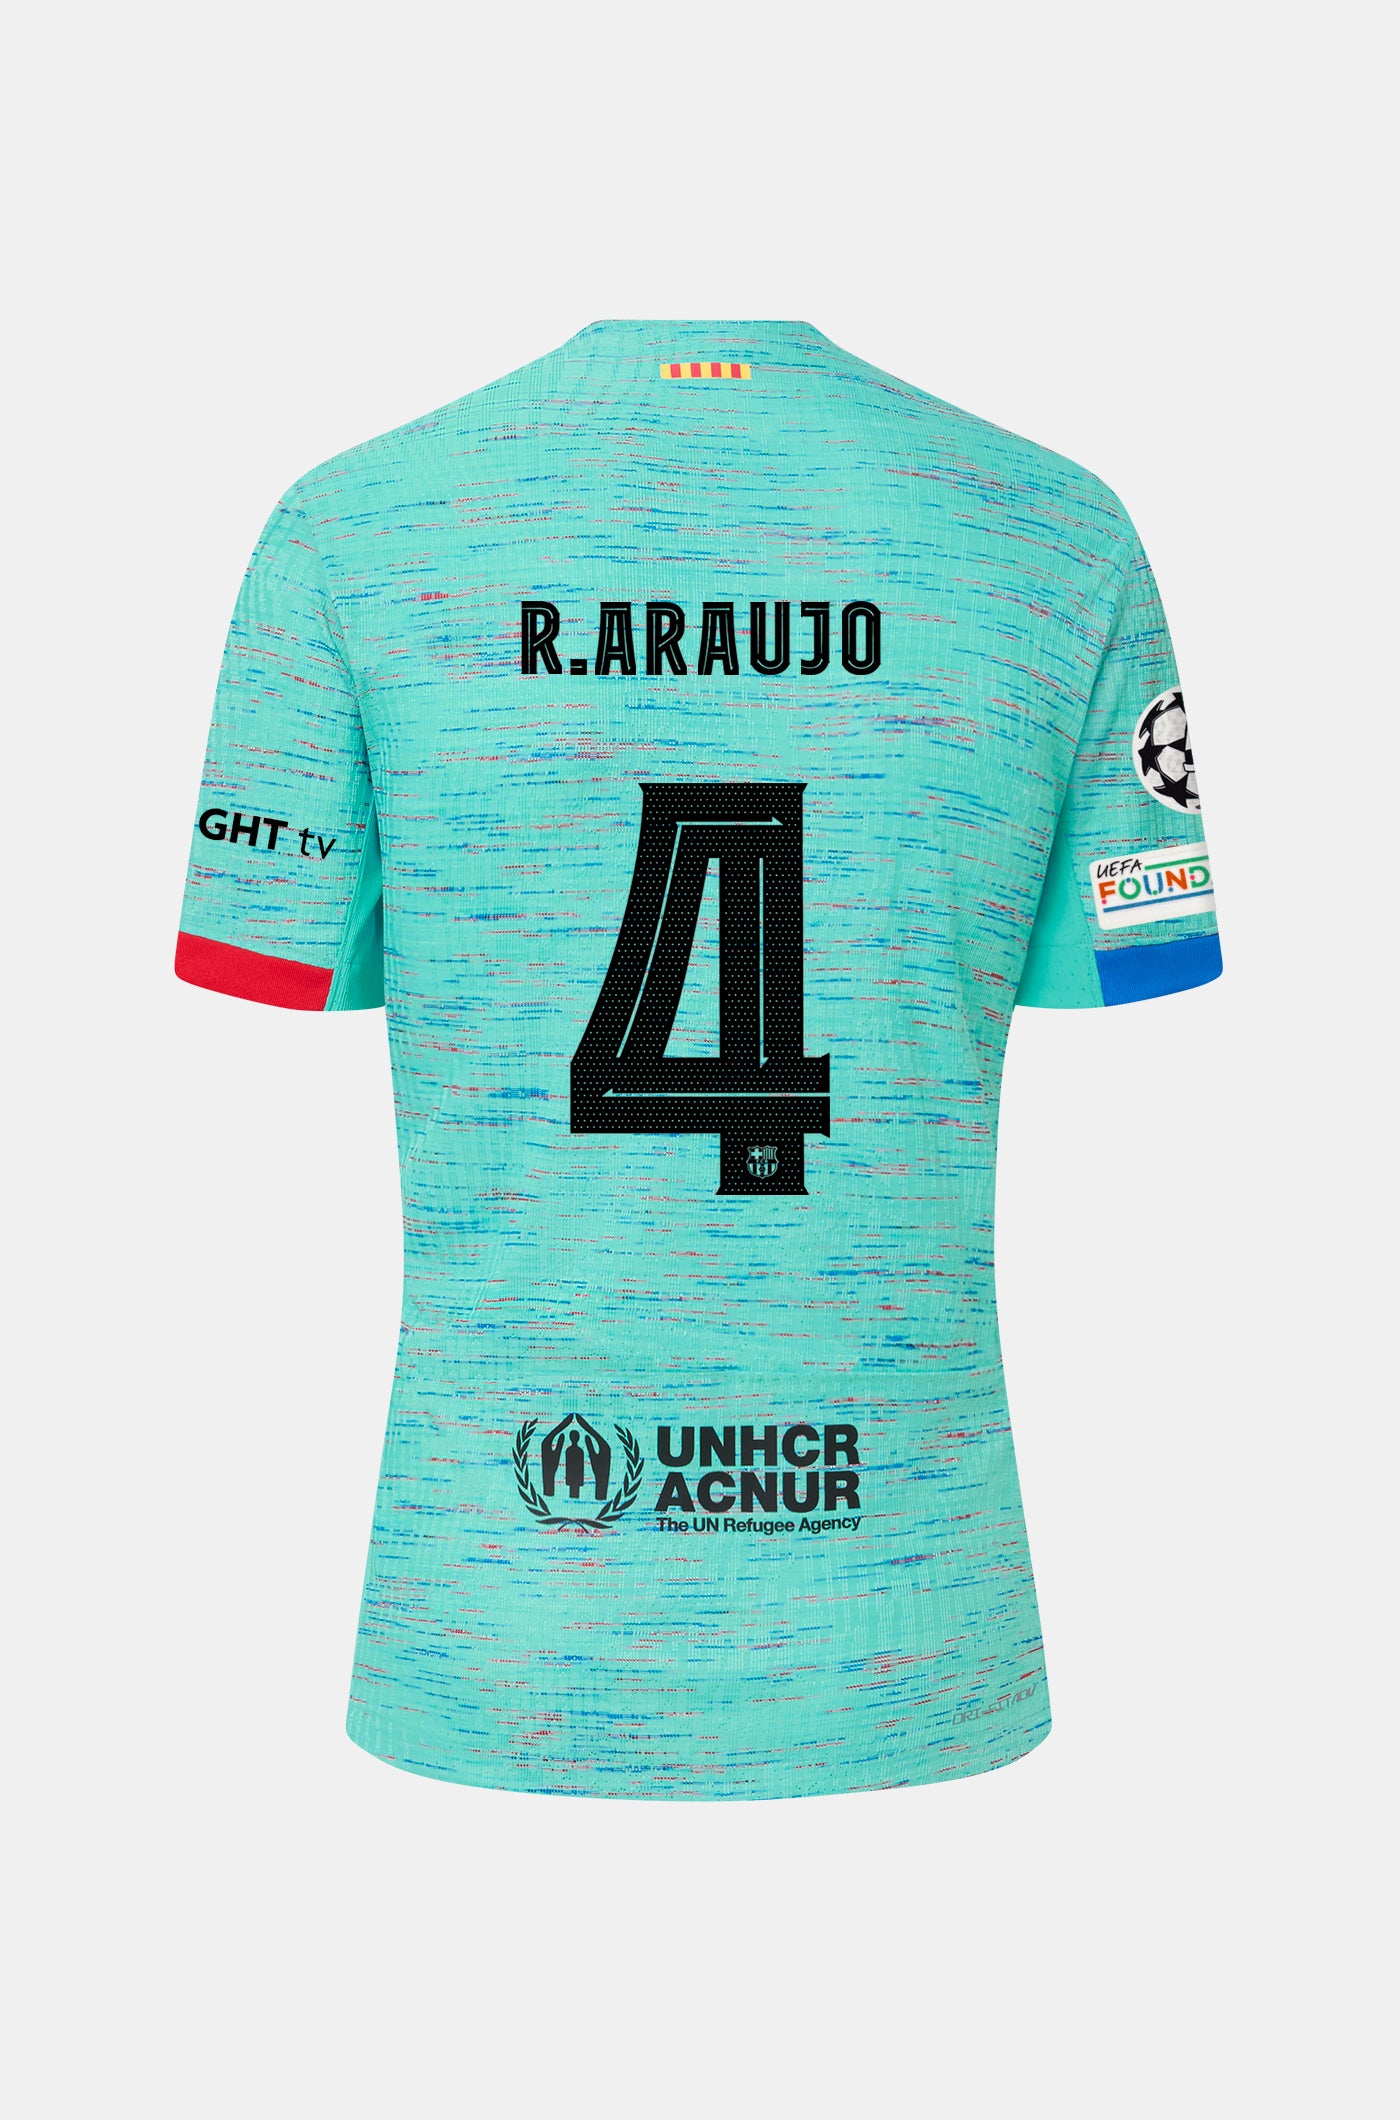 UCL FC Barcelona third shirt 23/24 Player’s Edition - R. ARAUJO